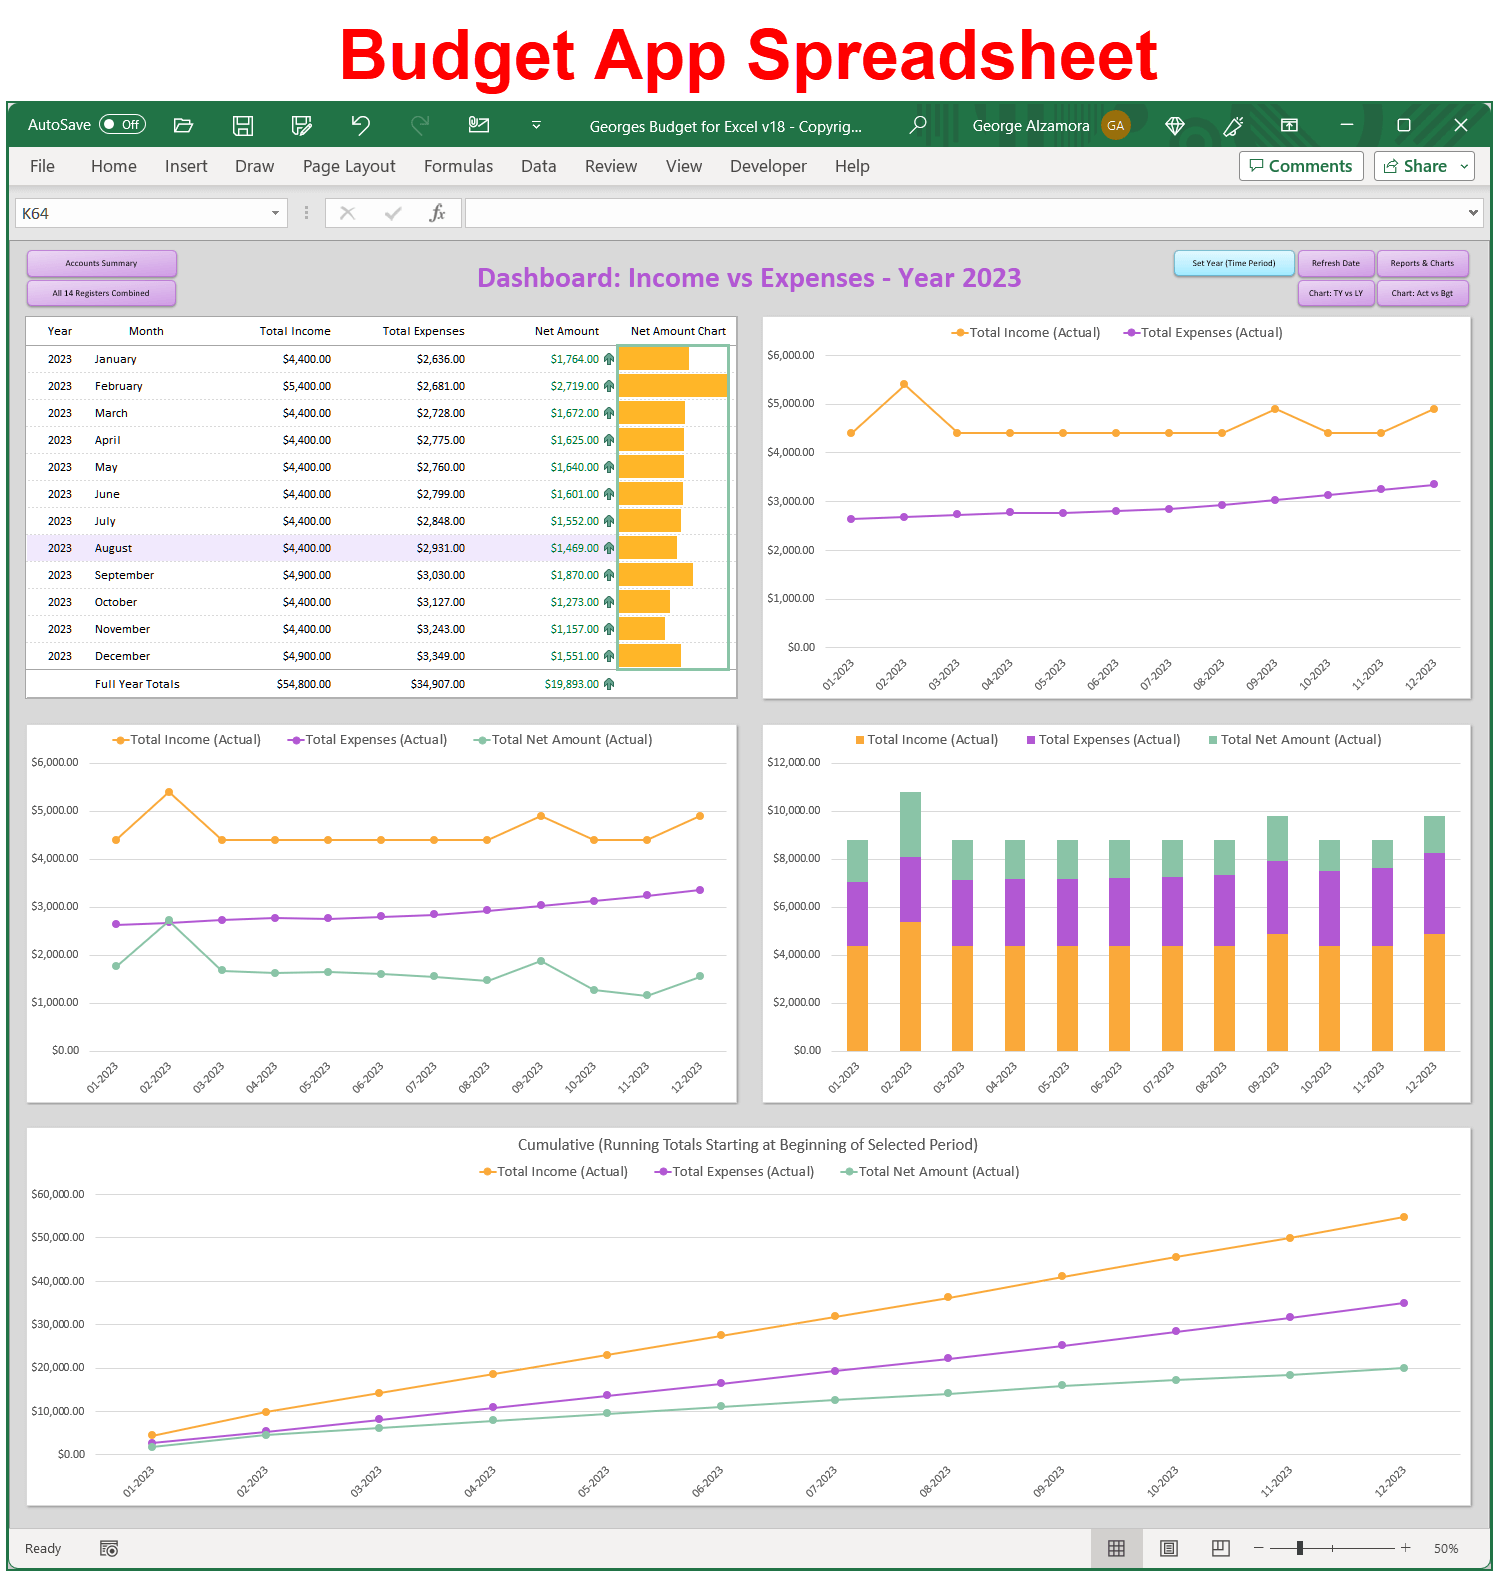 Budget App Spreadsheet